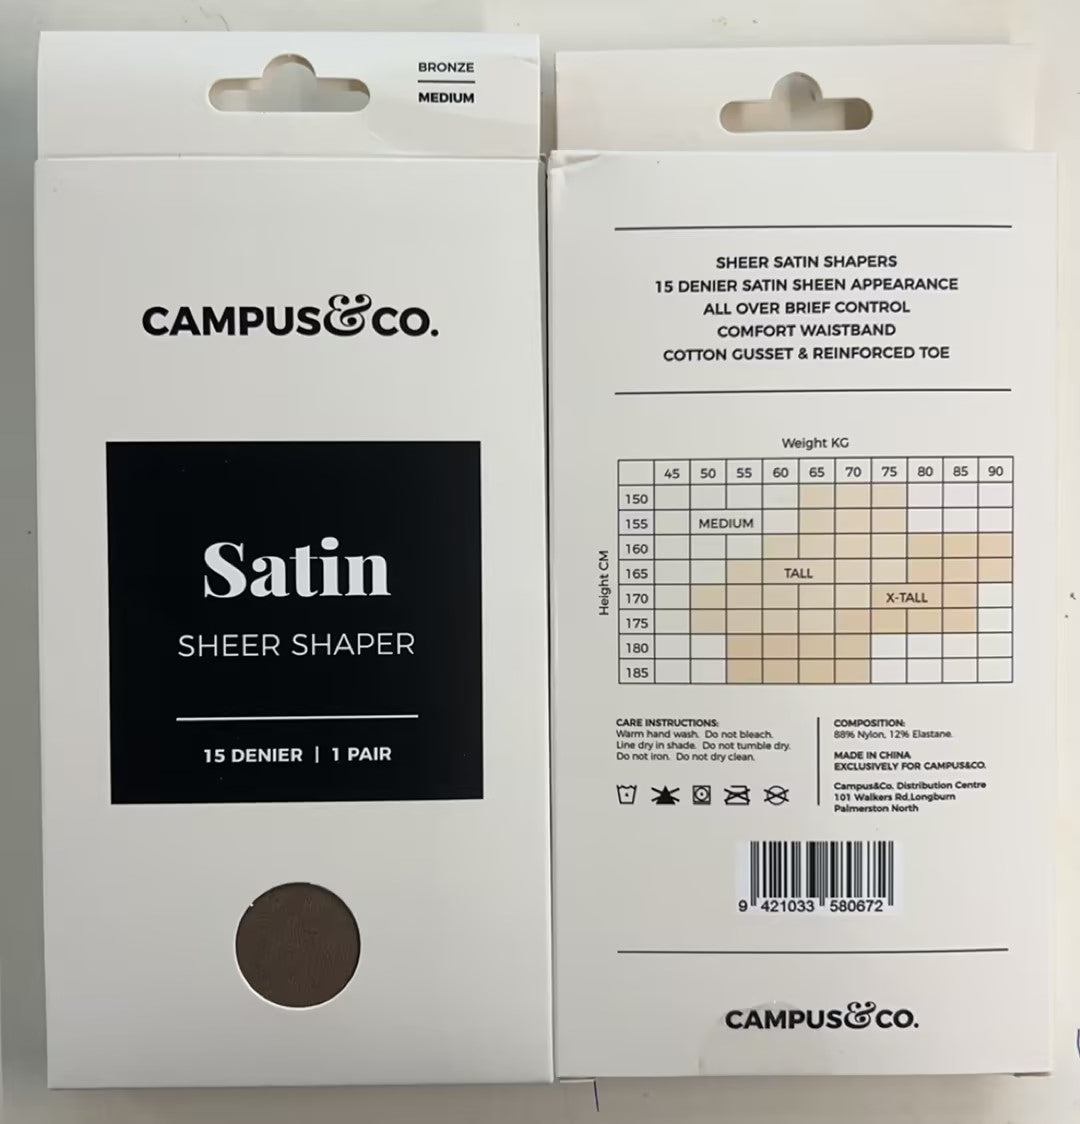 Campus&Co. Satin Sheer Shaper Bronze Medium (Case of 10)